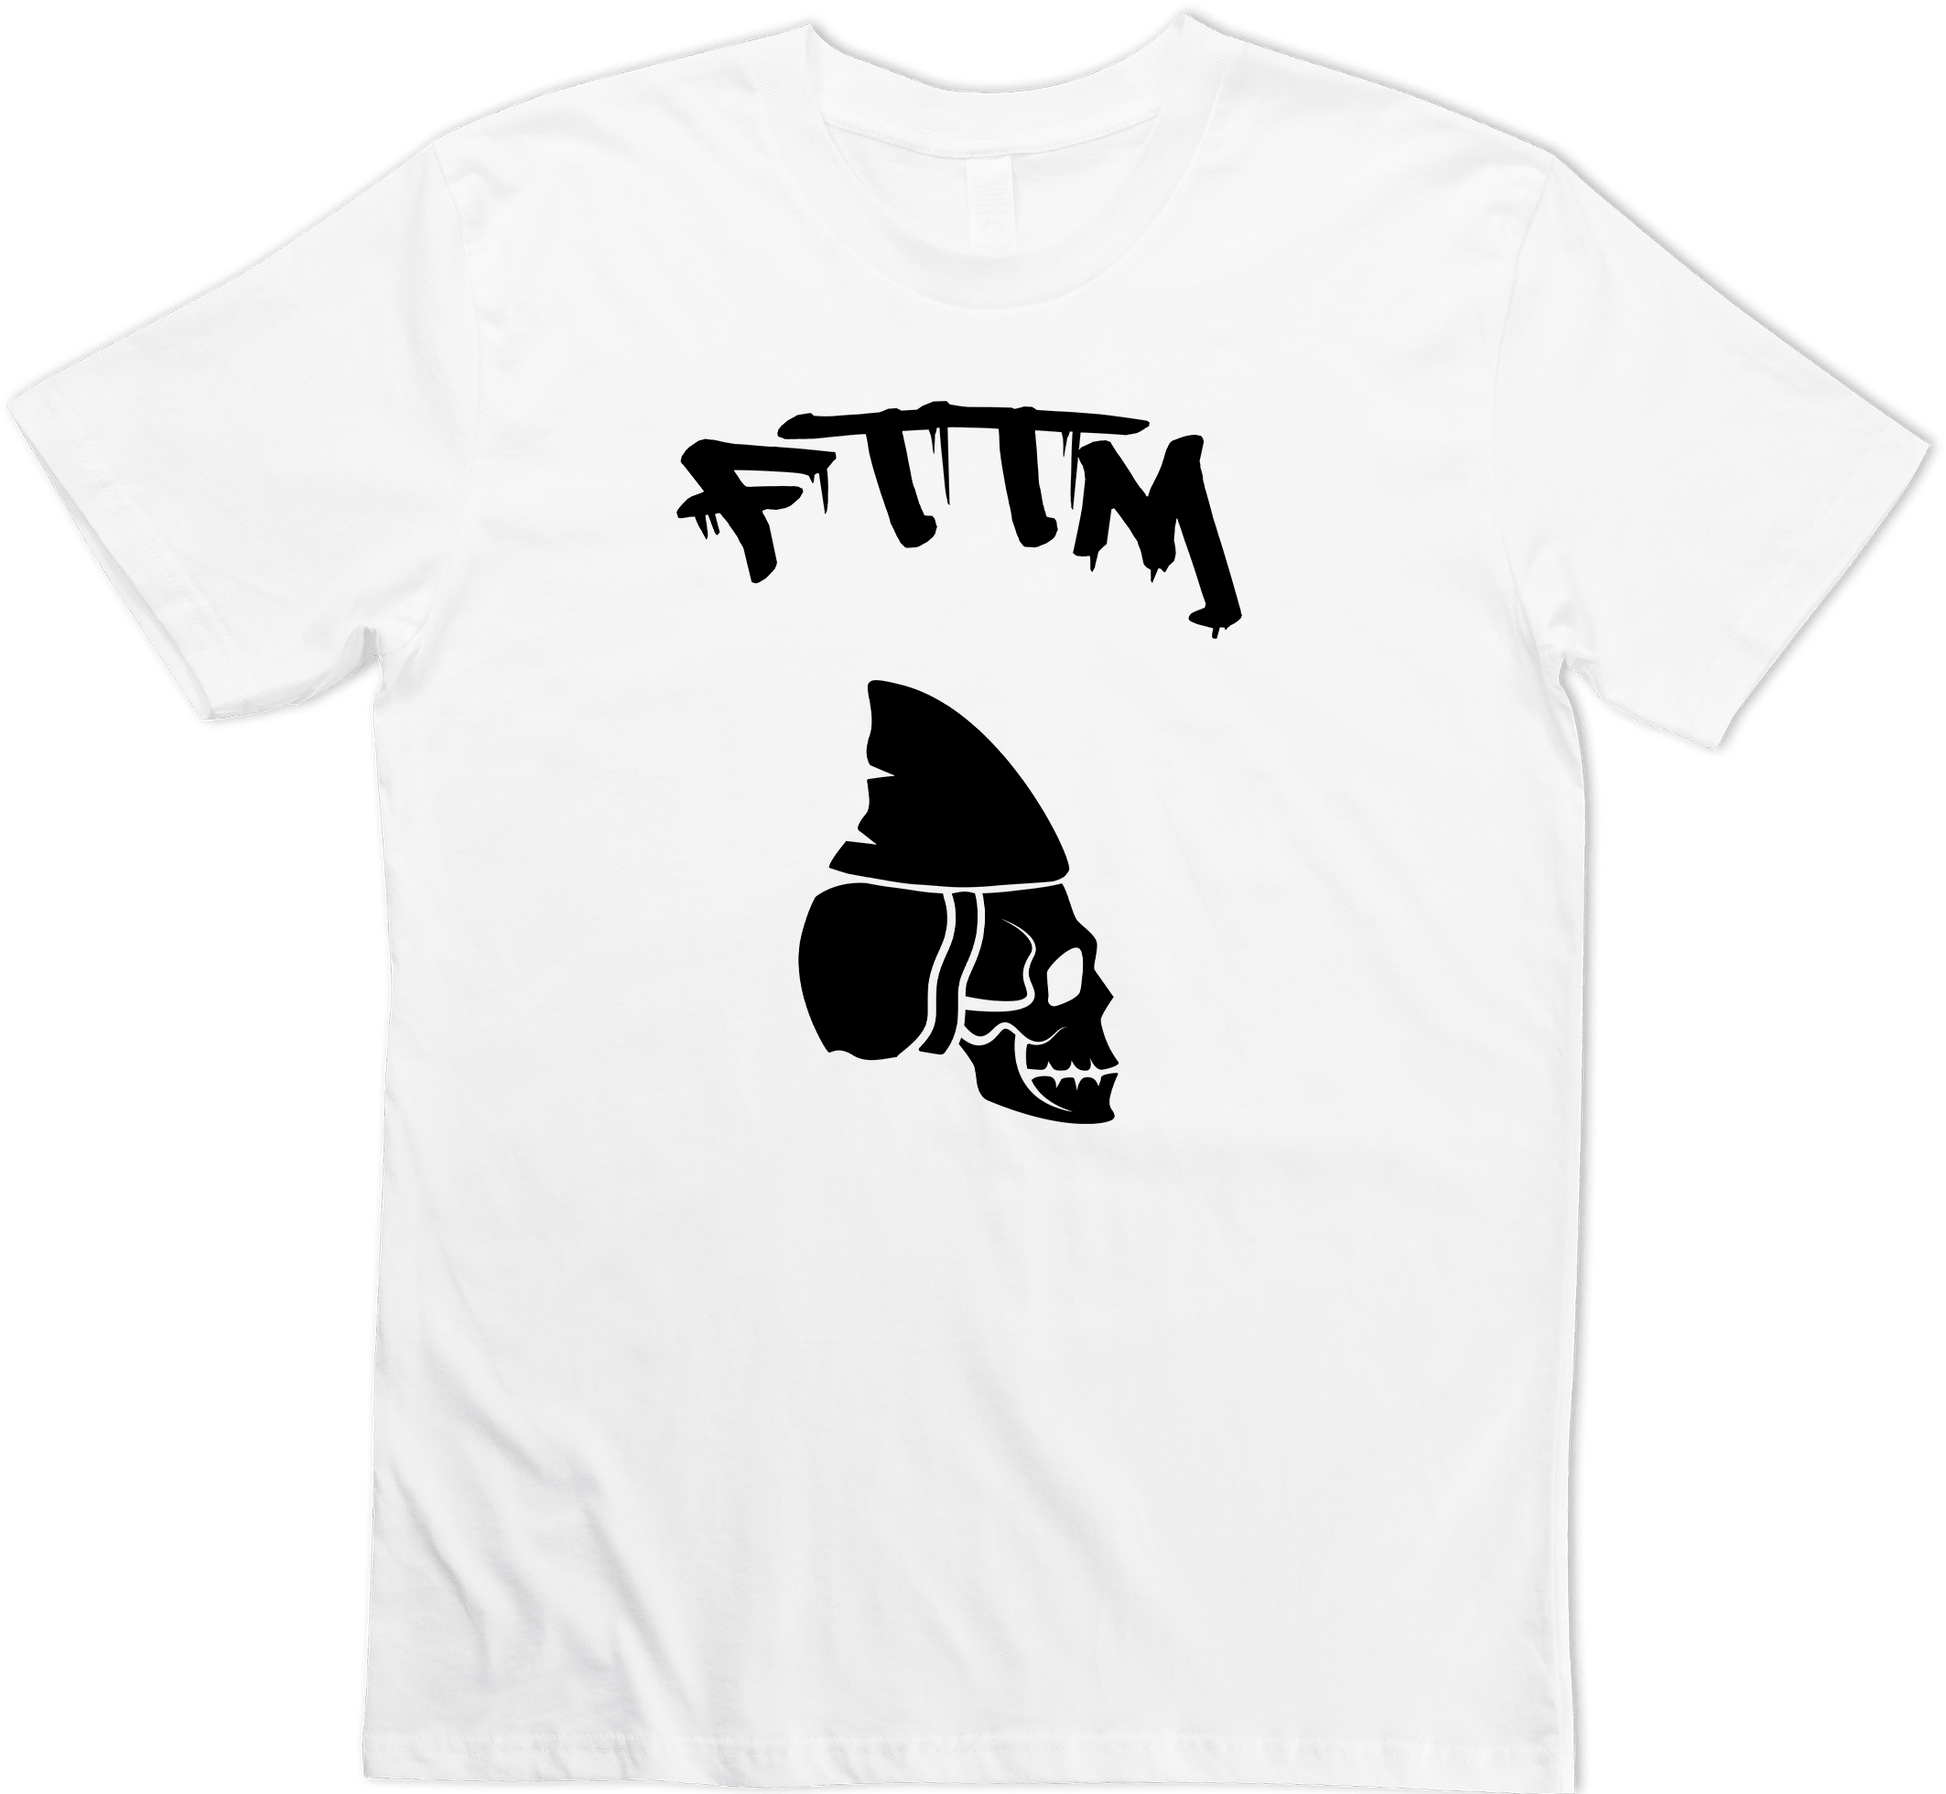 FTTM Logo white shirt